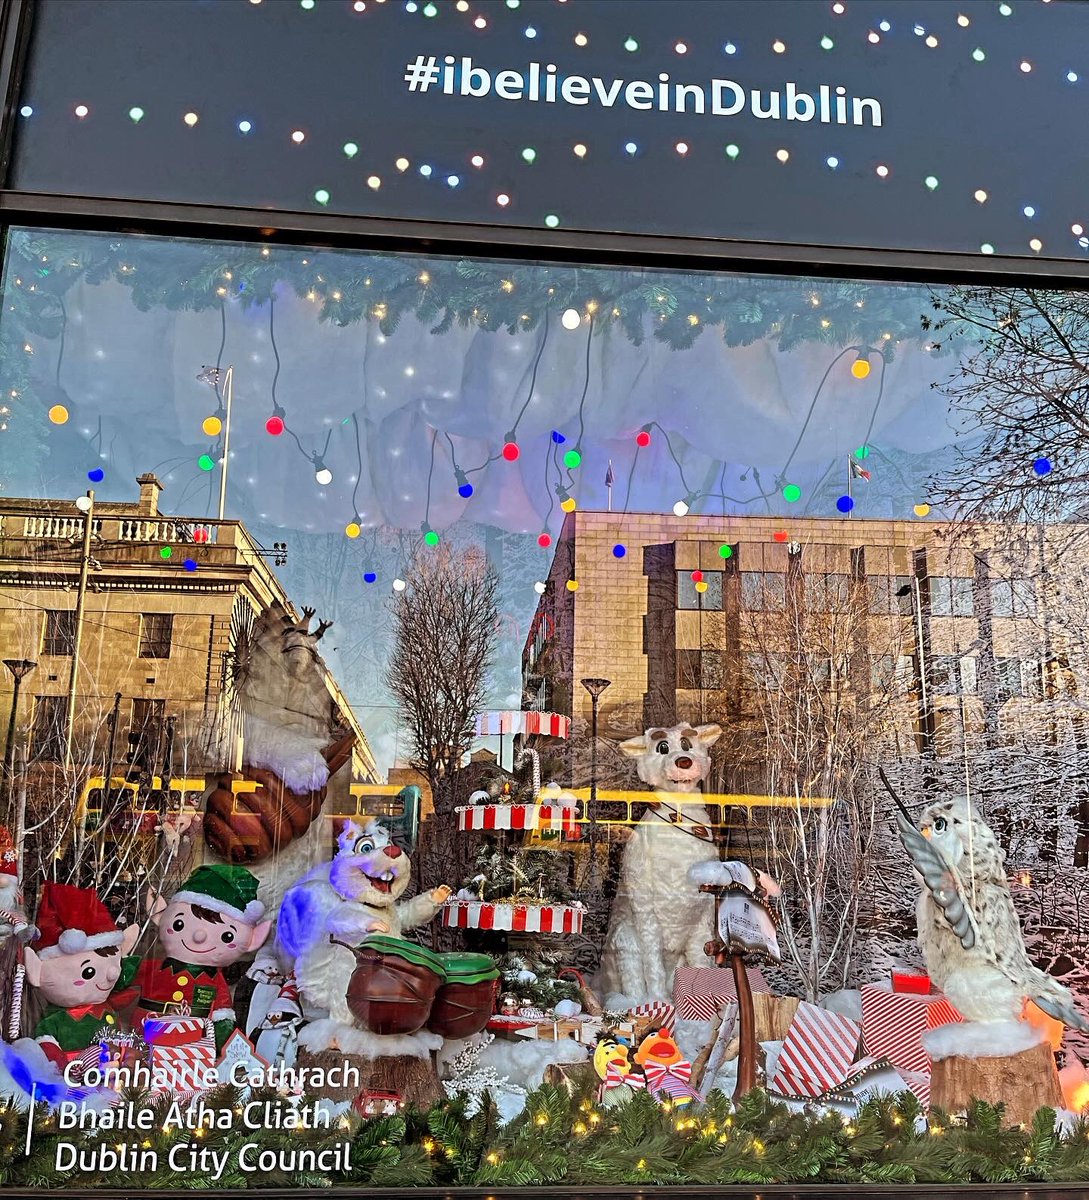 Clery’s Christmas windows 
💚♥️💚♥️💚
#ibelieveindublin